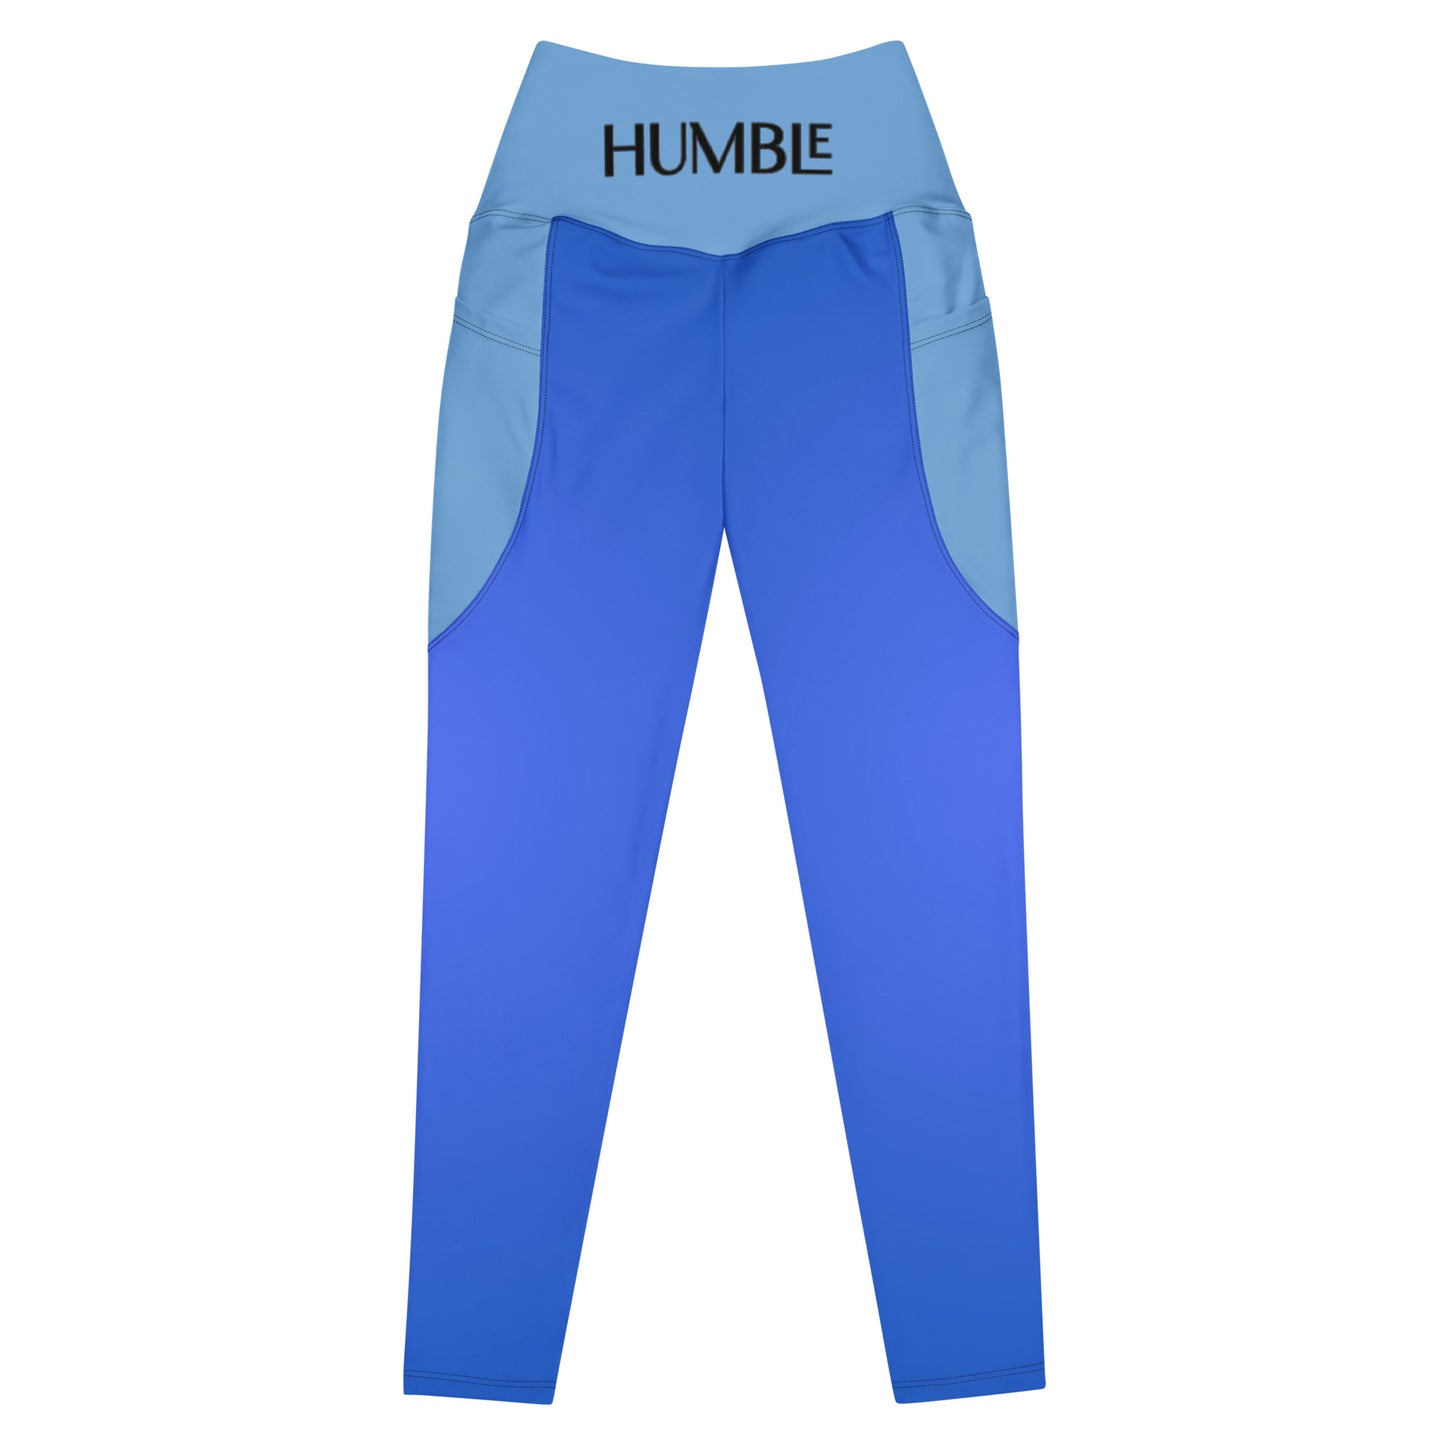 Humble Sportswear Color Match activewear, Humble Sportswear leggings, women’s leggings, women’s performance activewear leggings 